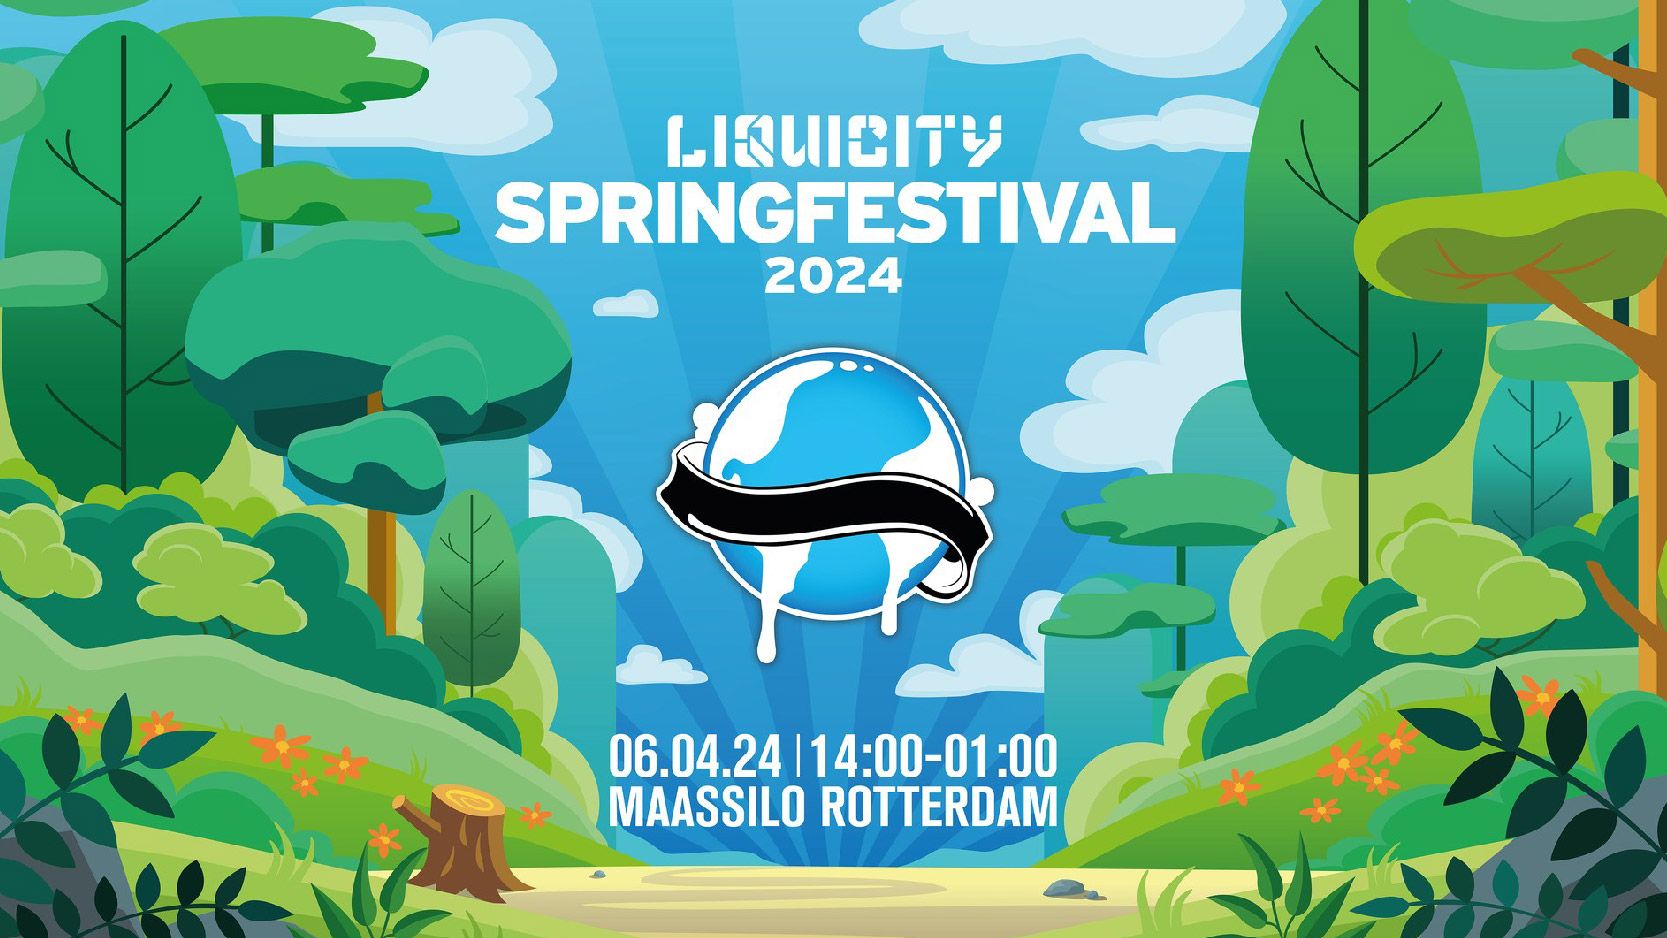 Liquicity Springfestival cover